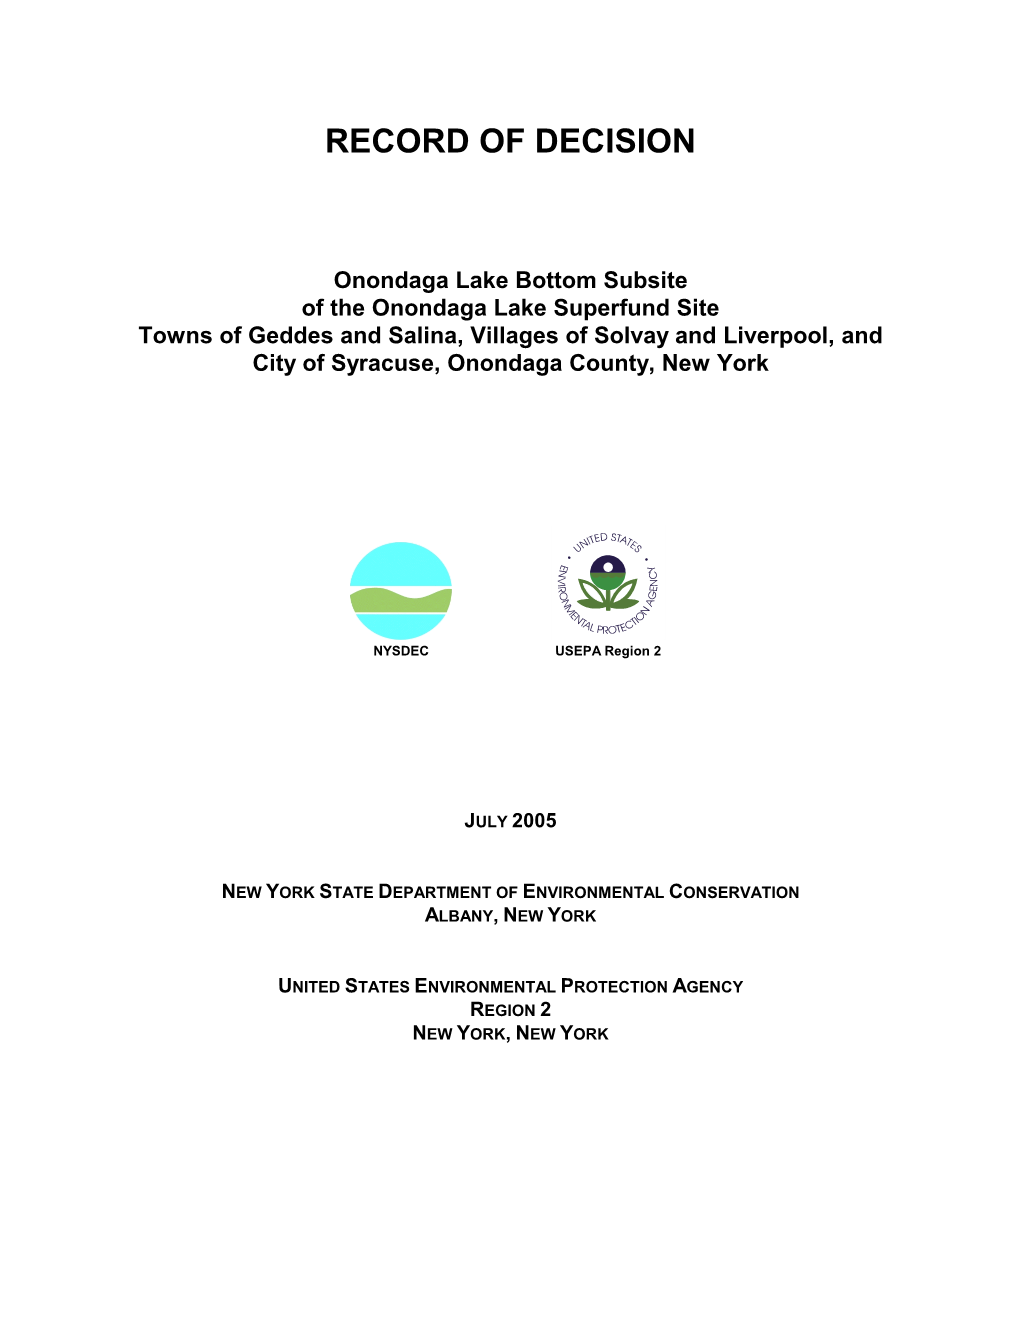 RECORD of DECISION, Onondaga Lake Bottom Subsite of The